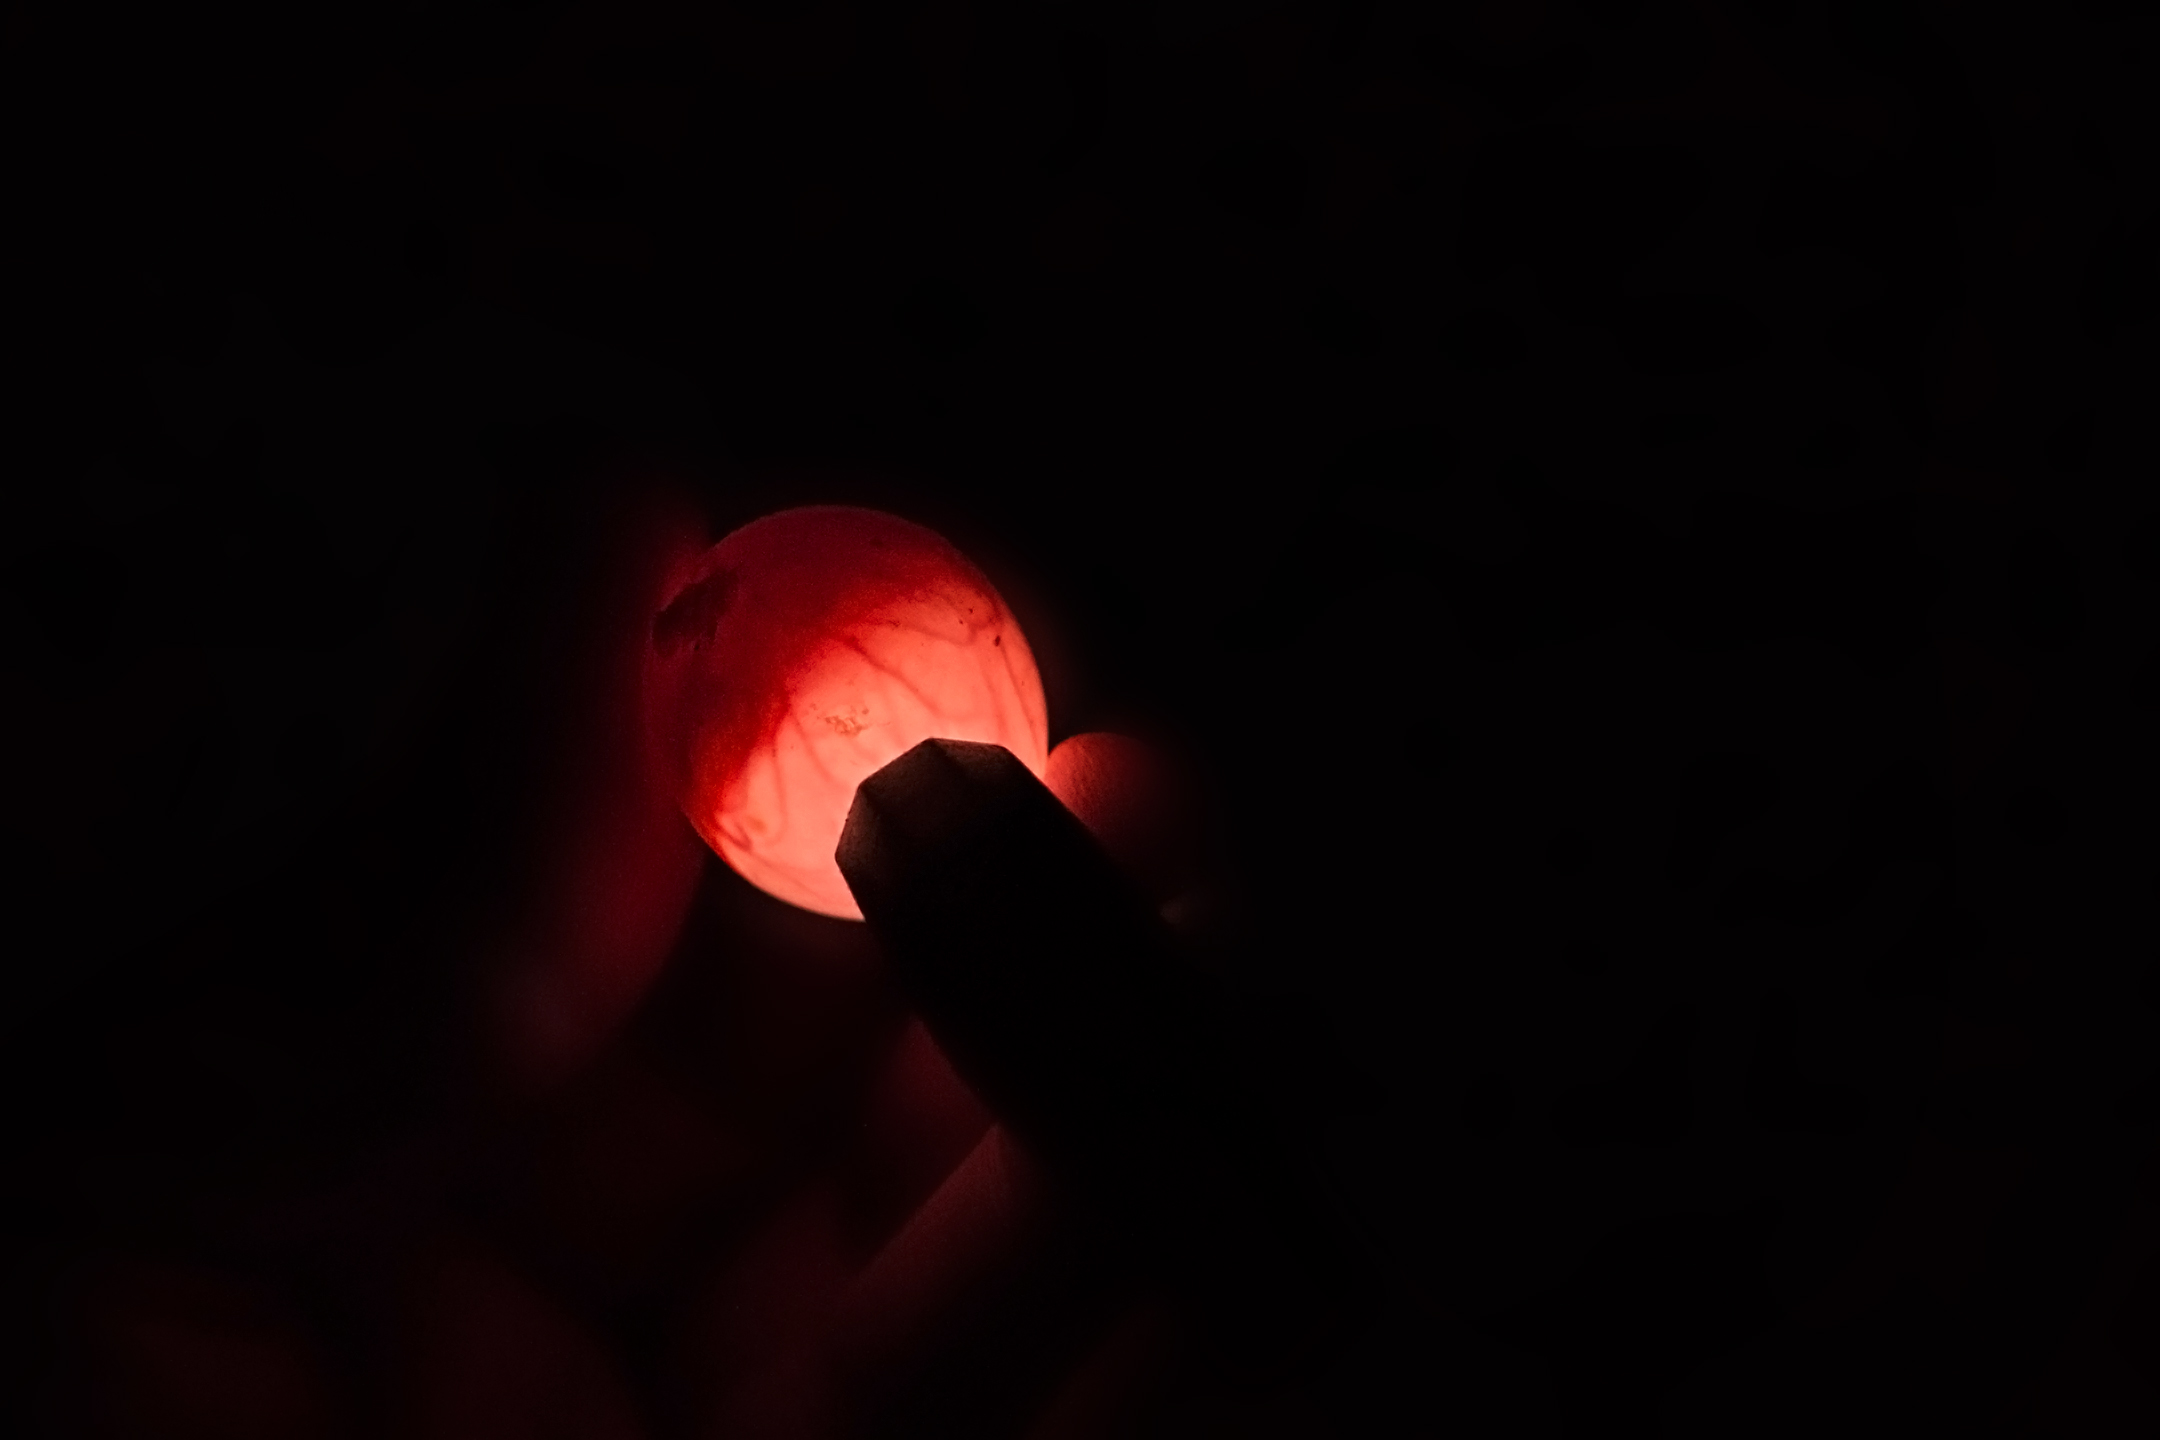 Flashlight held to an egg